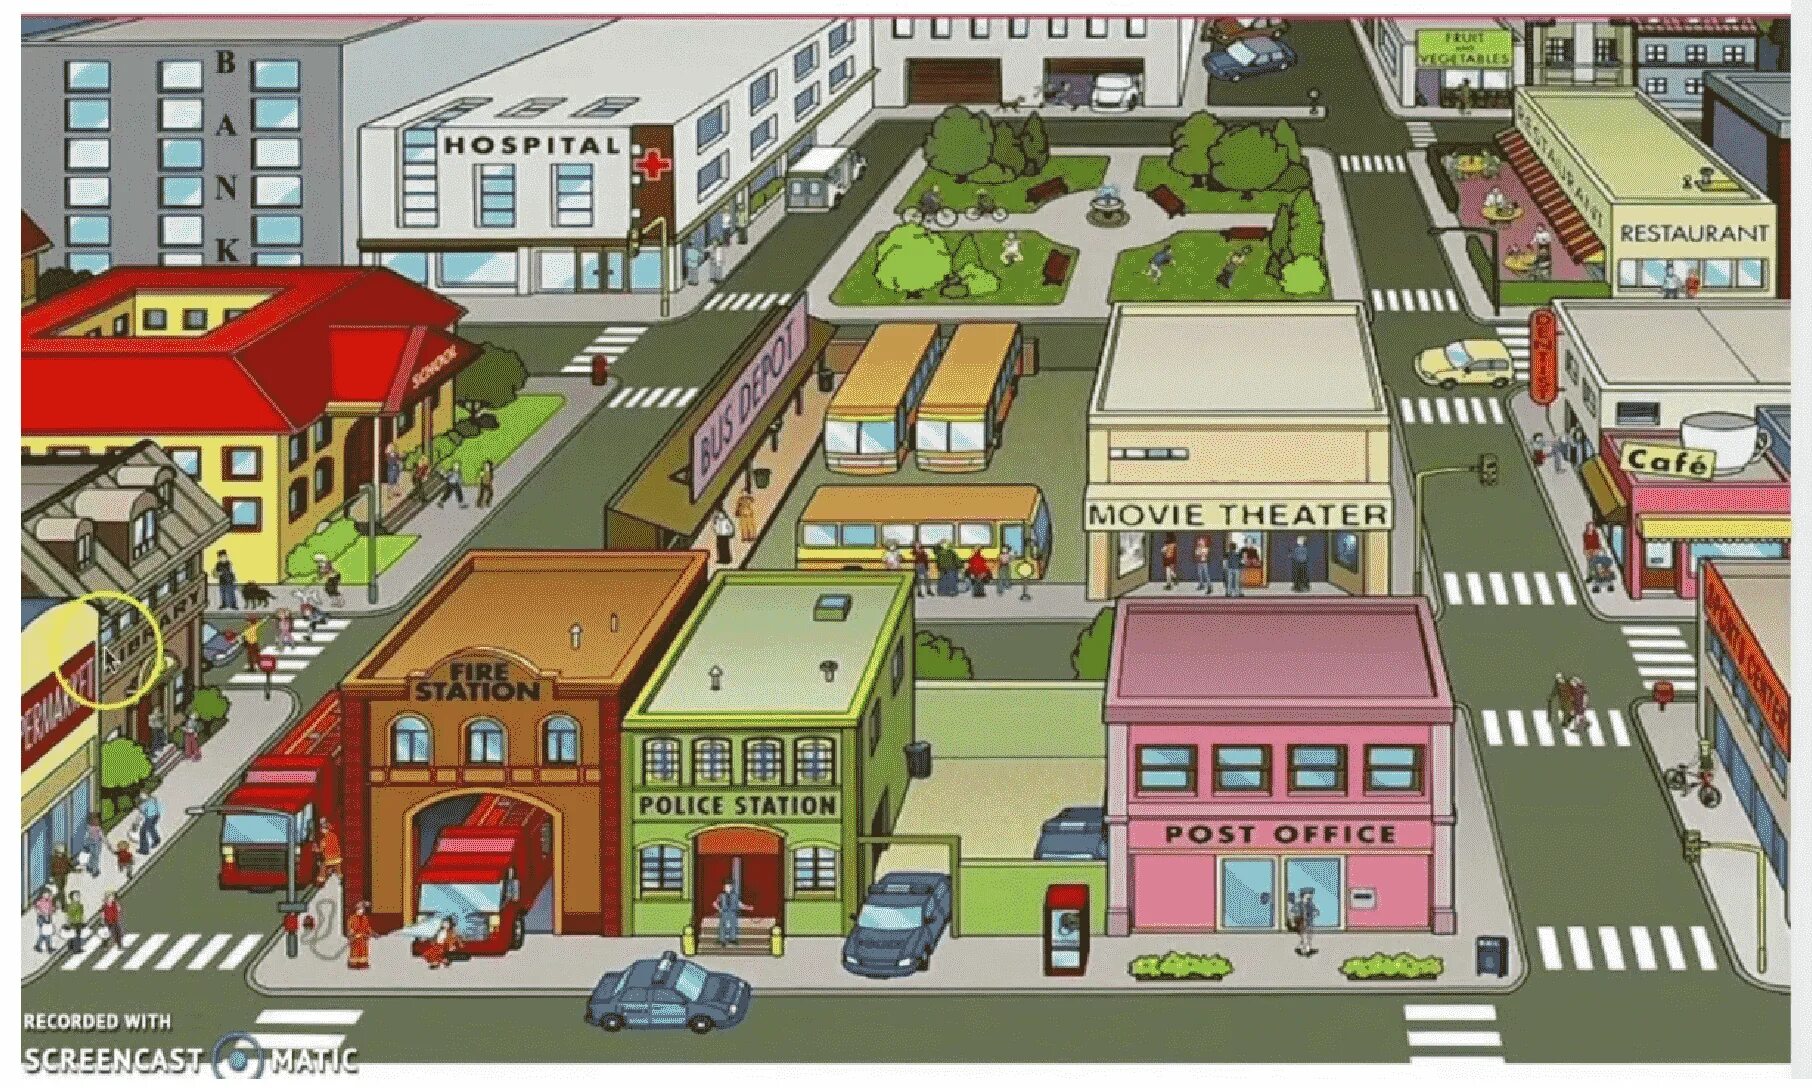 Go around the city. Places in Town для детей. Картинка города для описания. План города для детей. Здания на английском тема город.